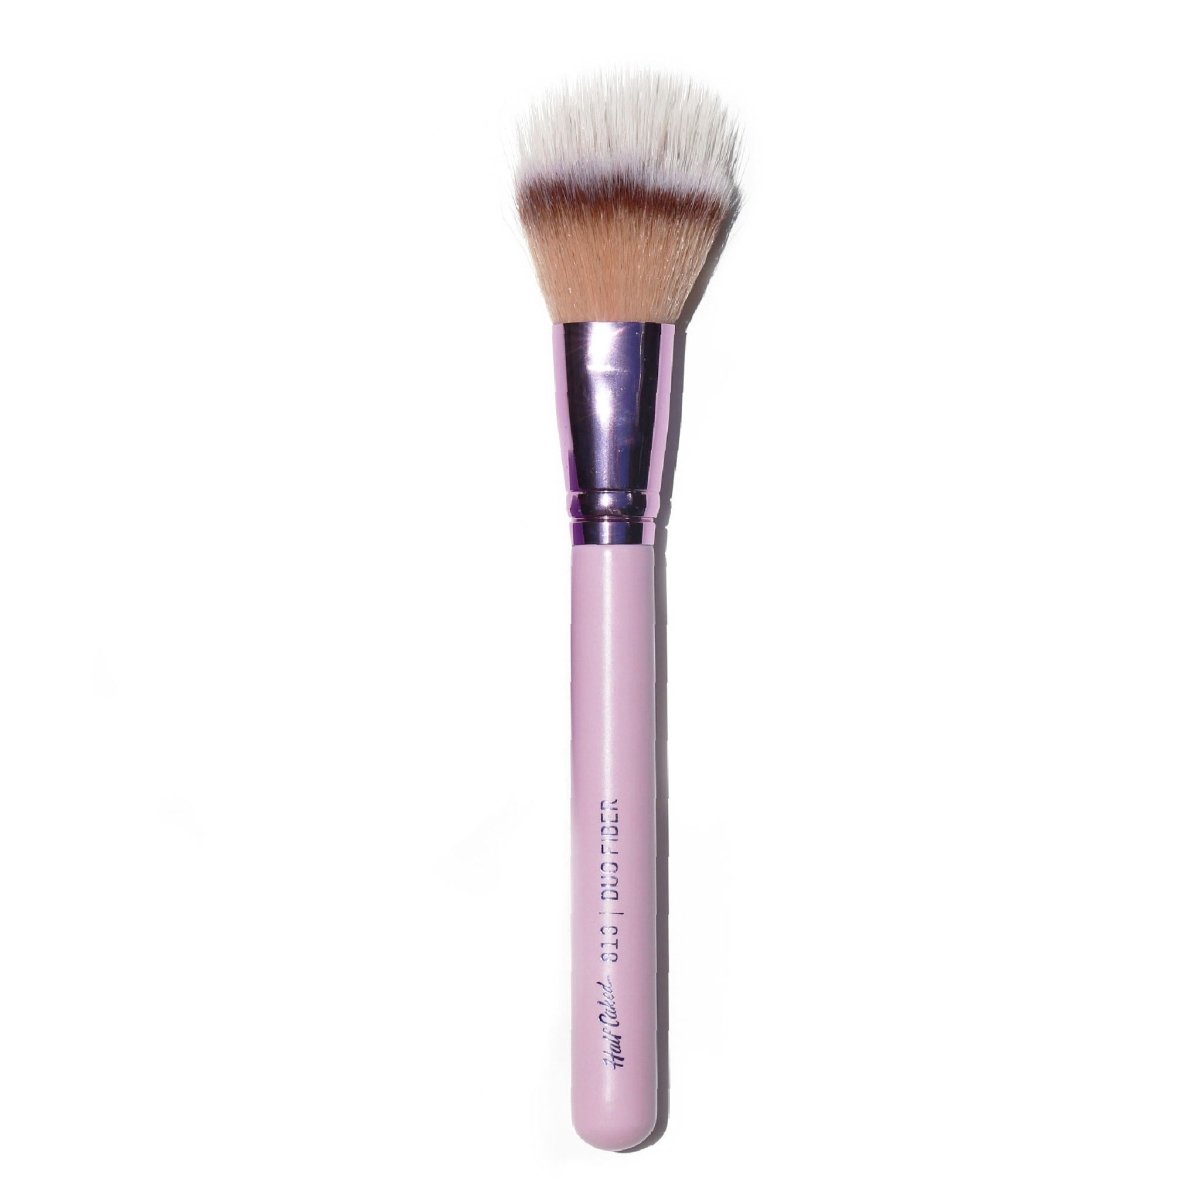 shiny purple tan brown and white blush brush - duo fiber - half caked makeup